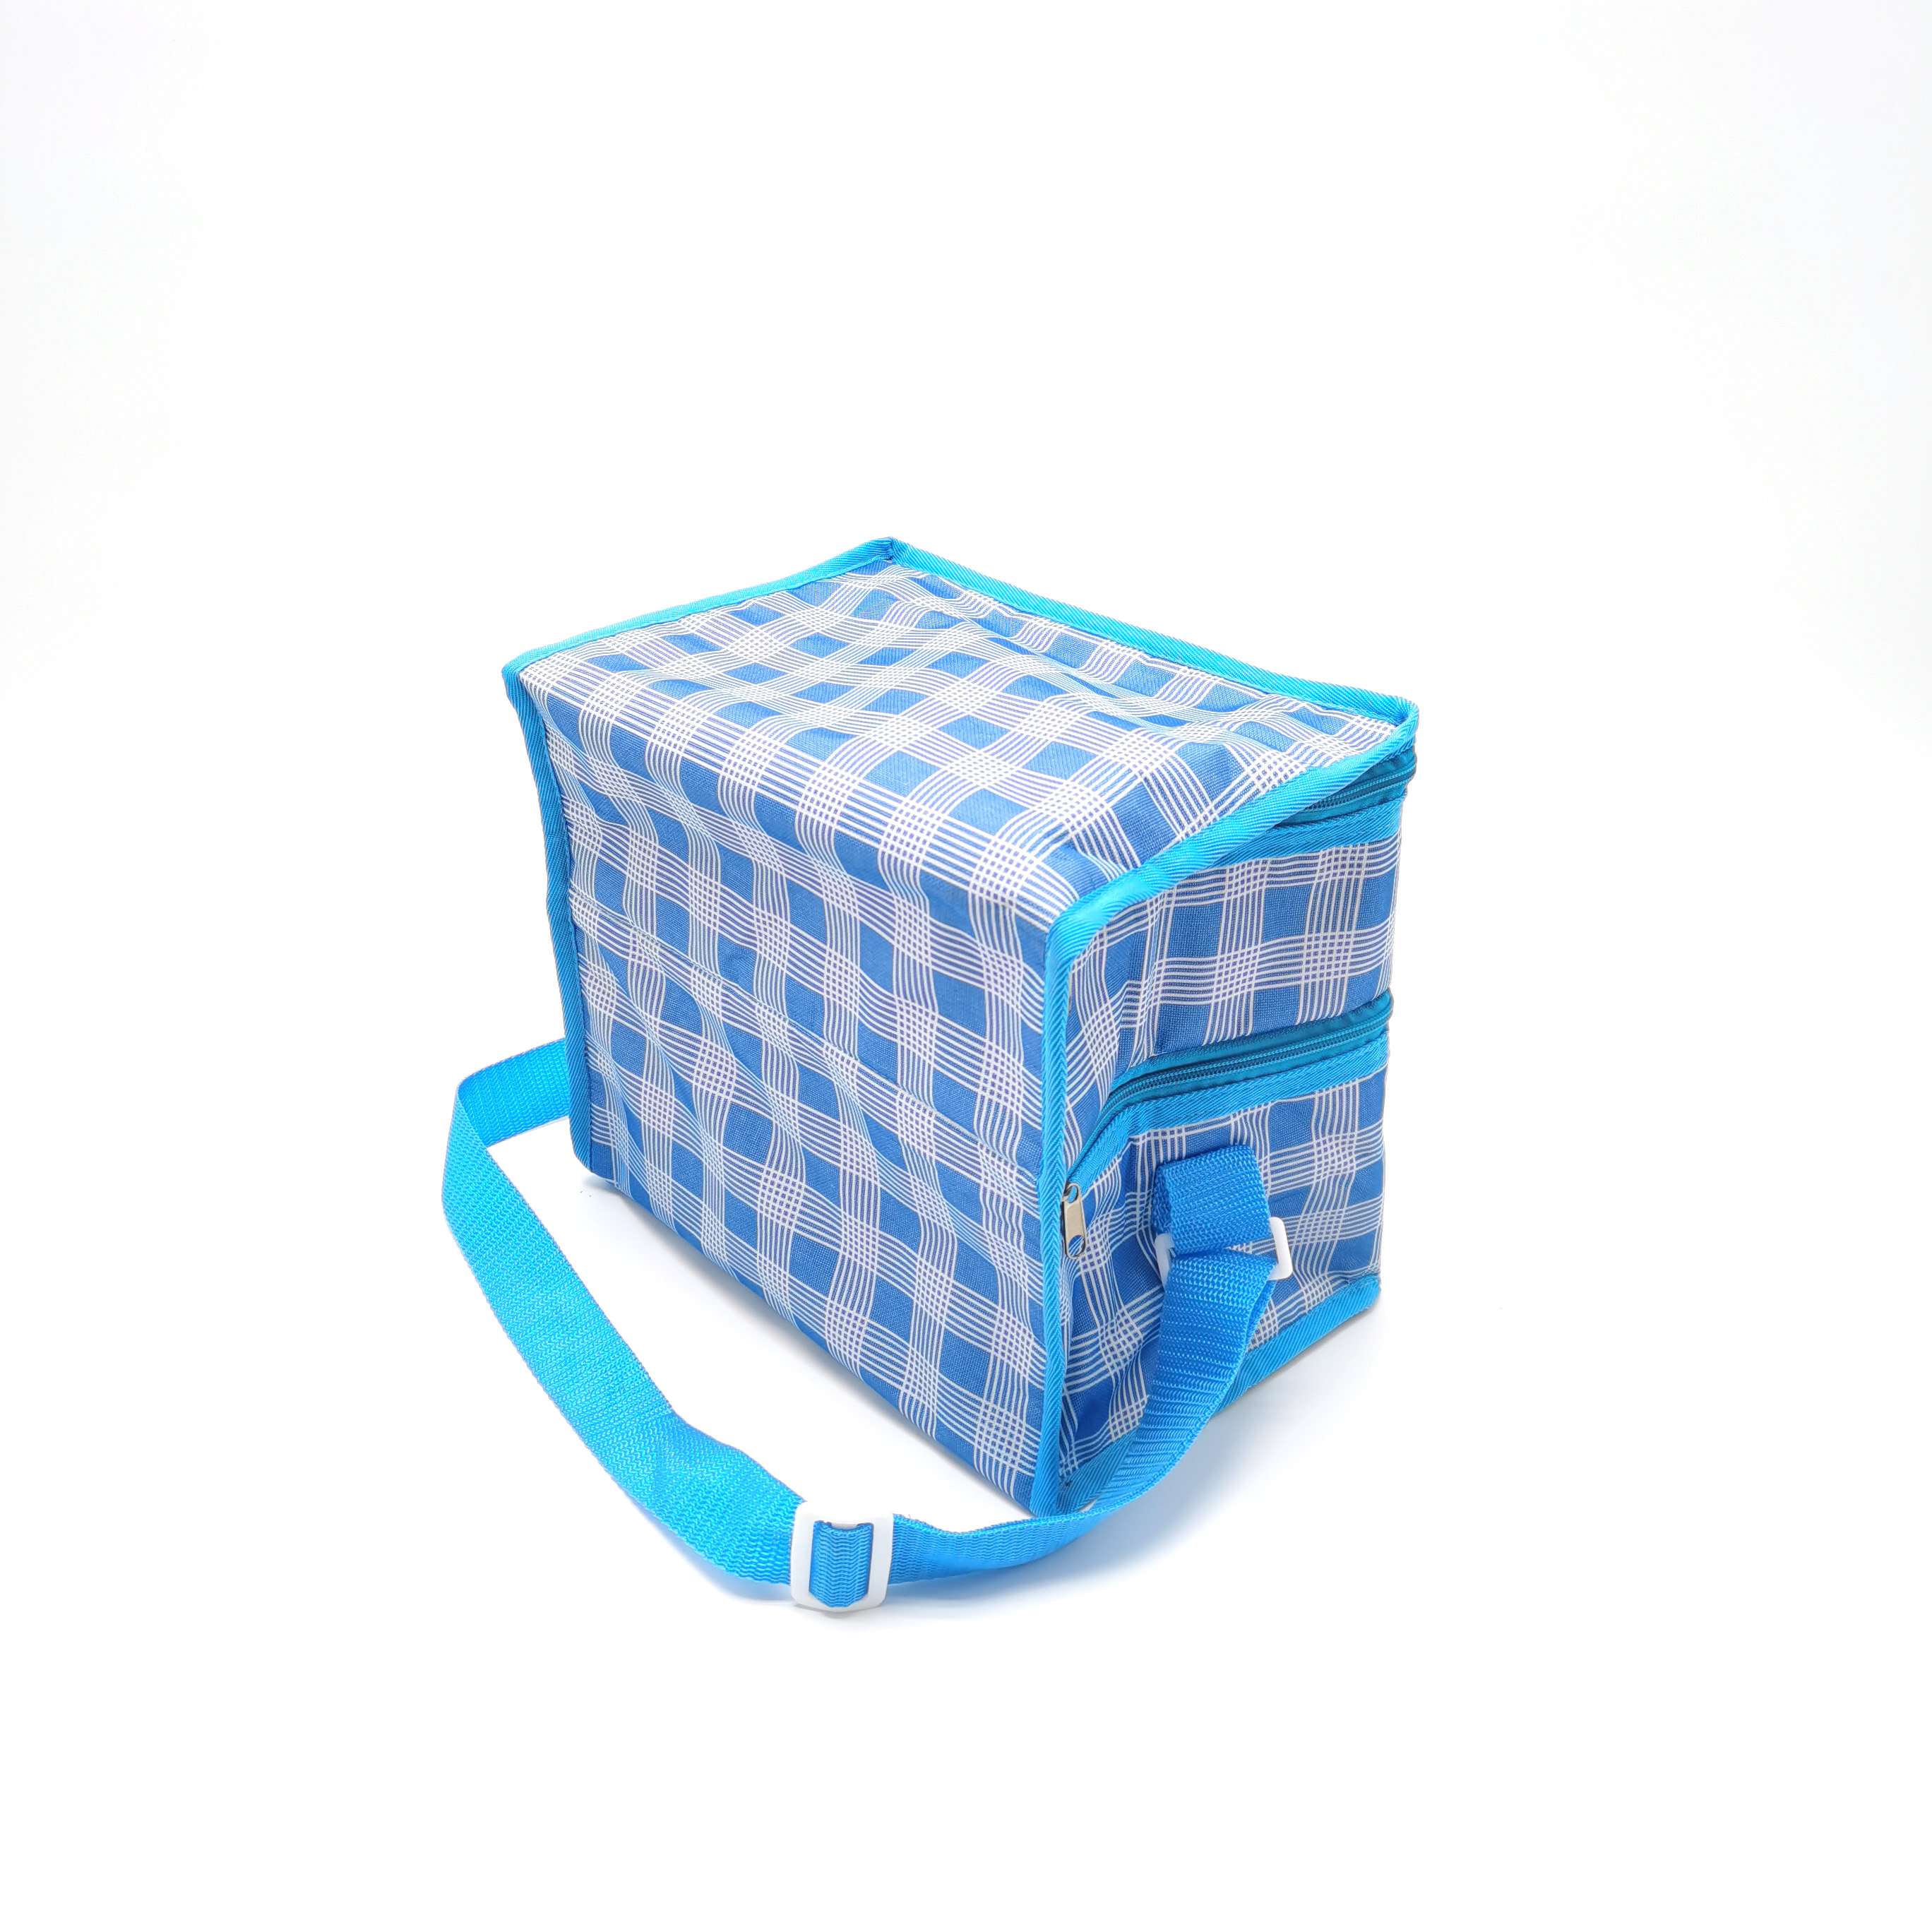  Reusable Lunch Cooler Bag 